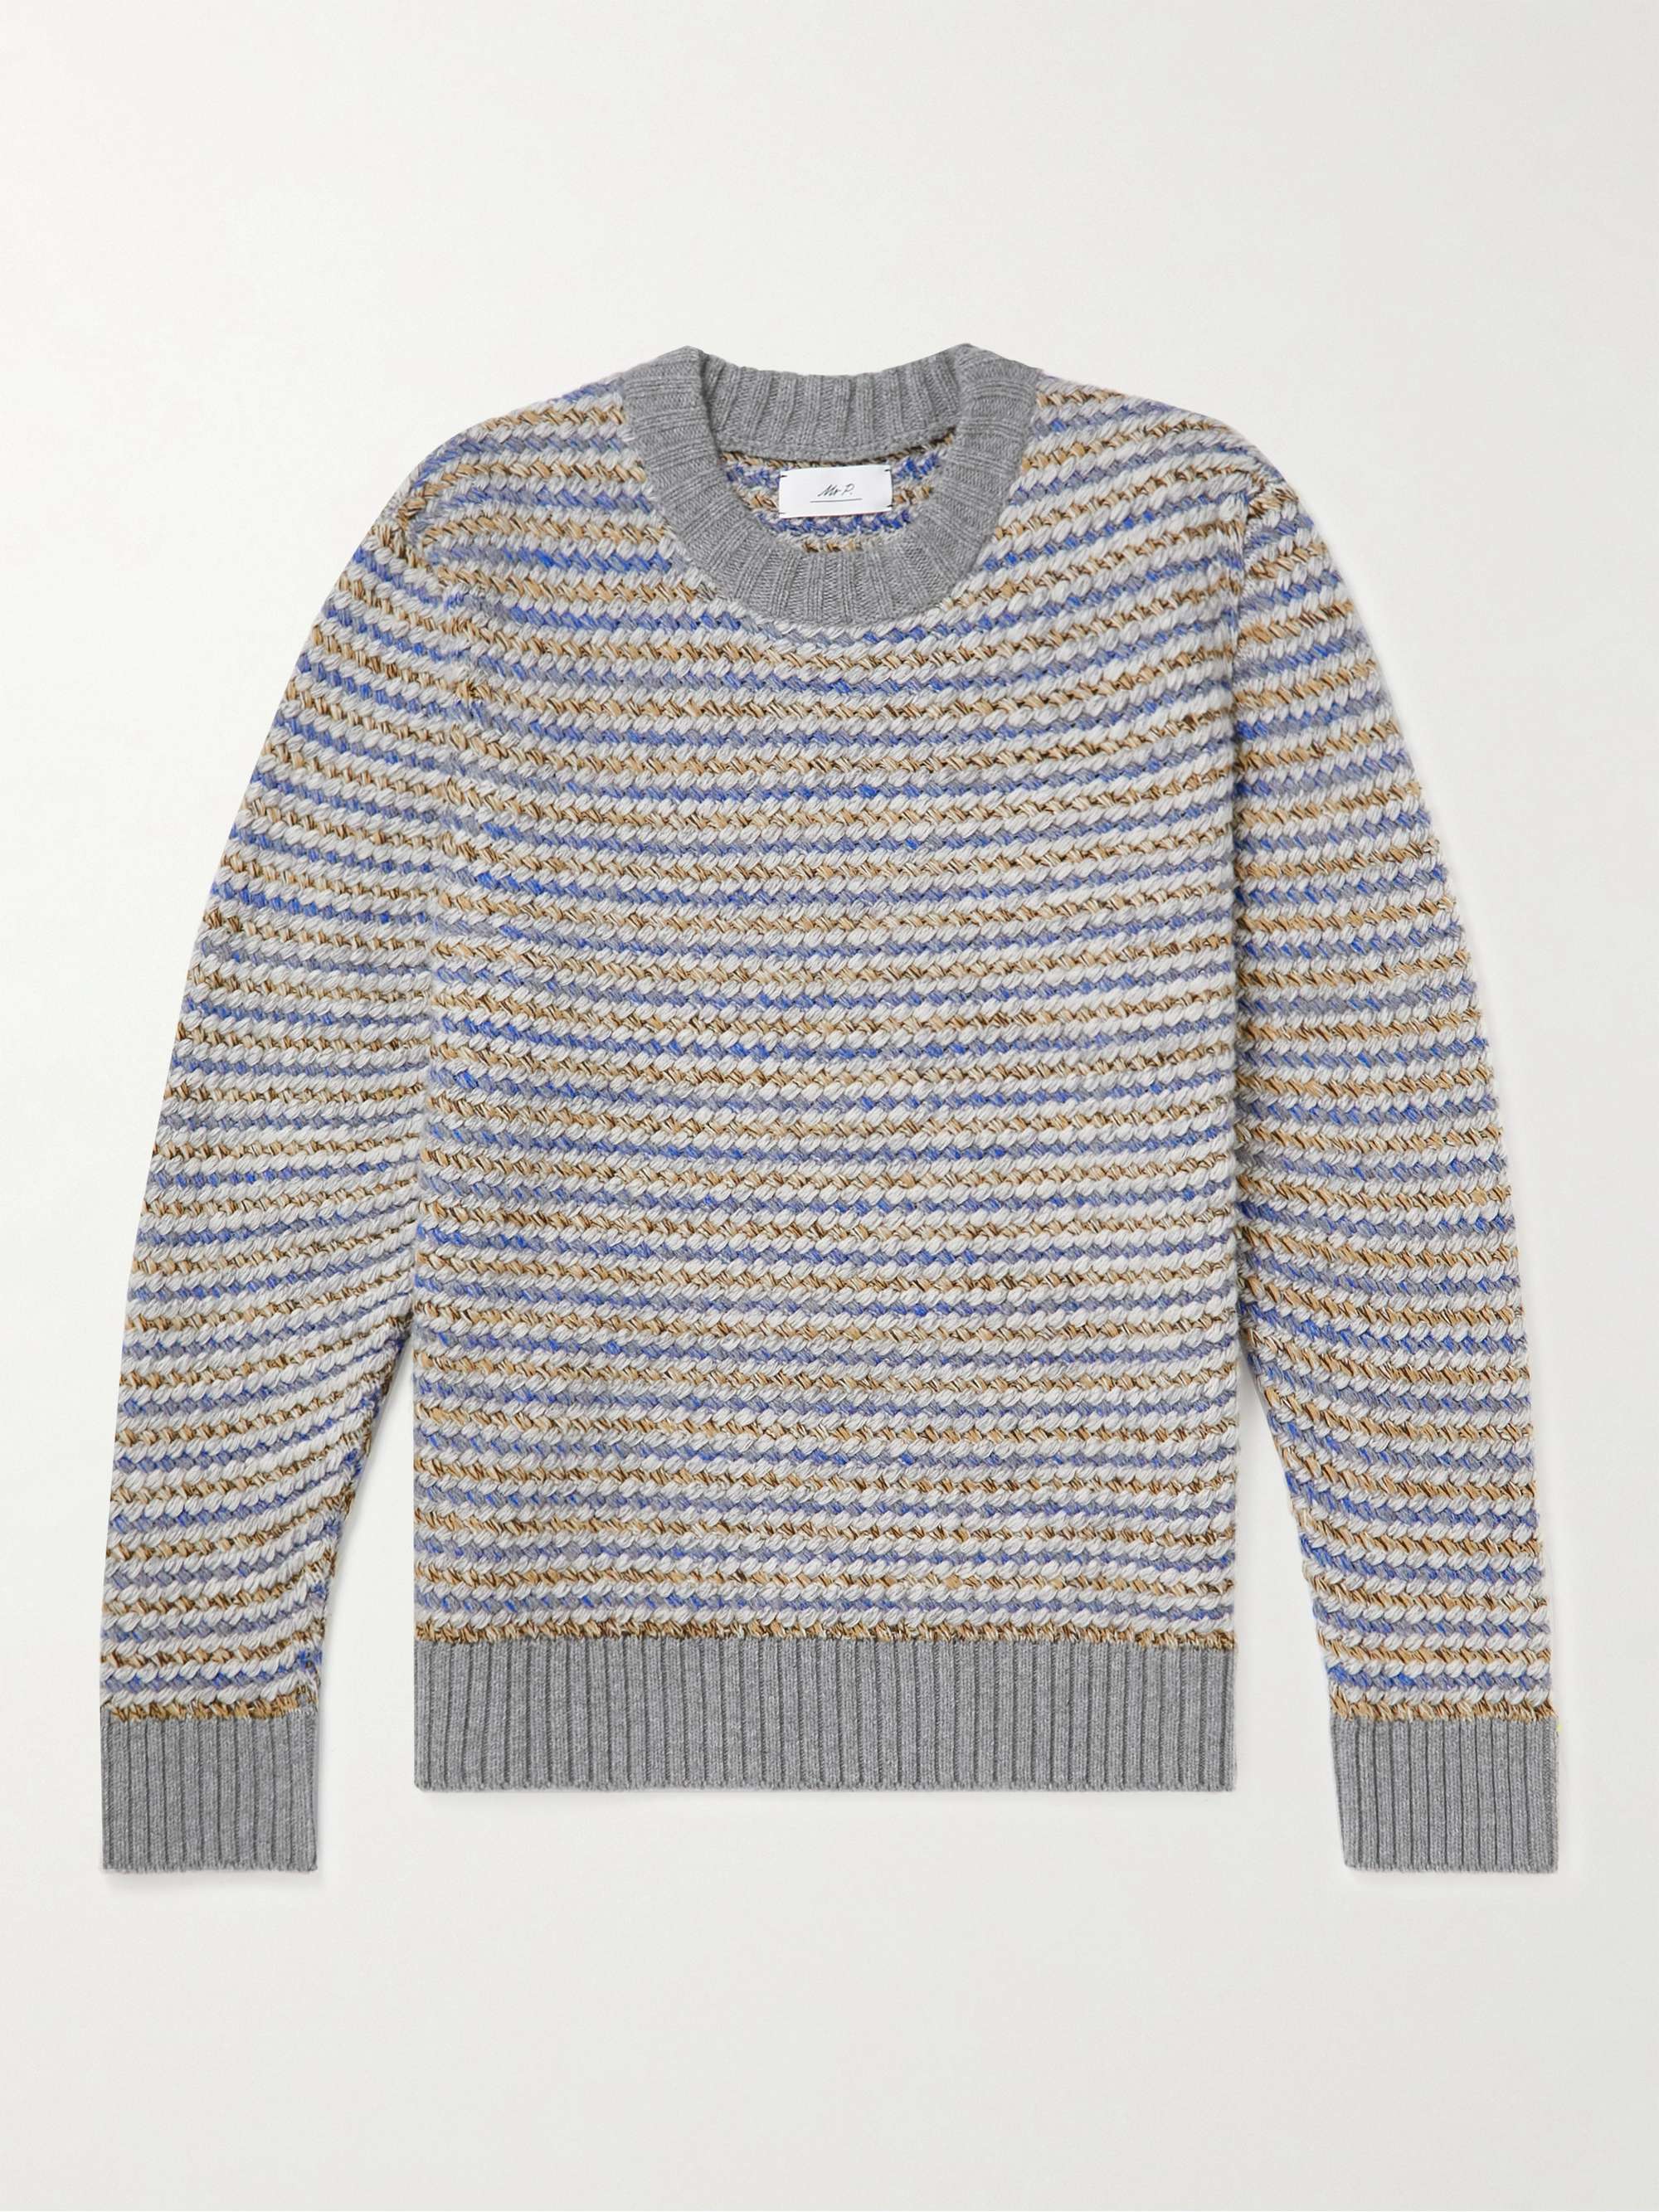 MR P. Striped Merino Wool Jacquard Sweater